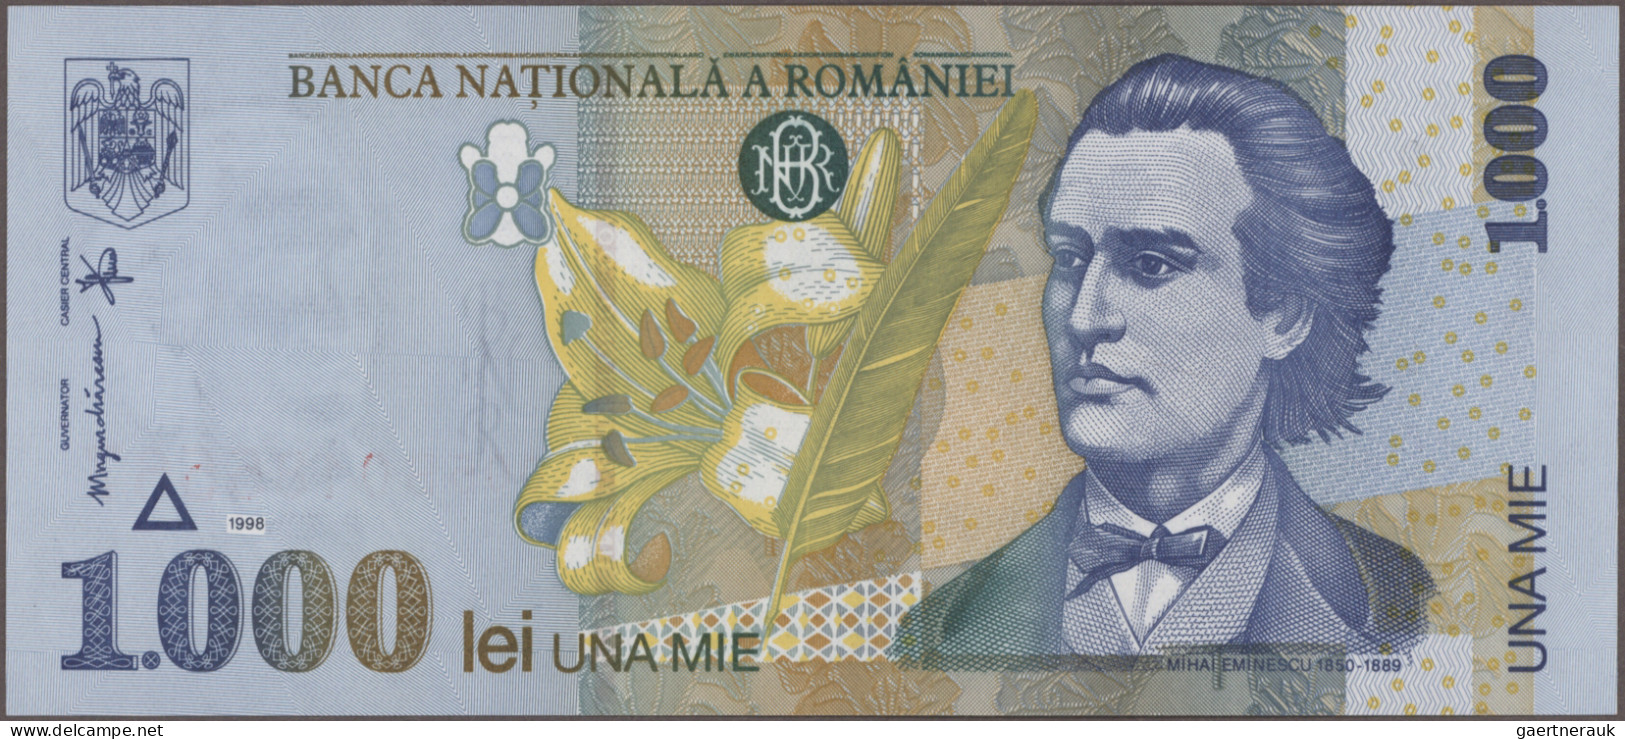 Romania: Lot with 92 banknotes Austria, Moldova and Romania with many duplicates